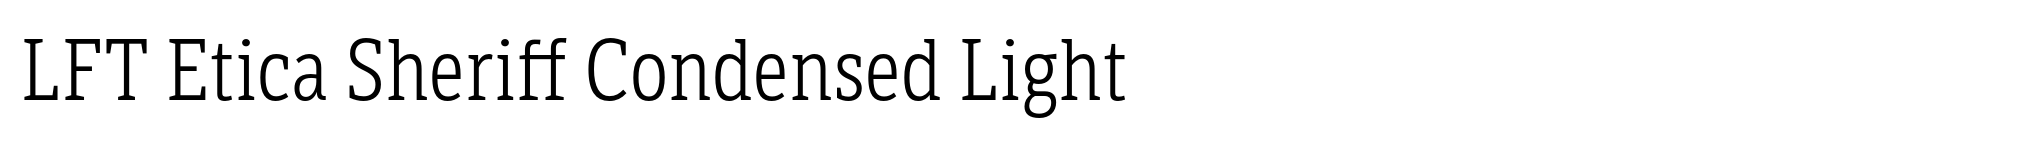 LFT Etica Sheriff Condensed Light image